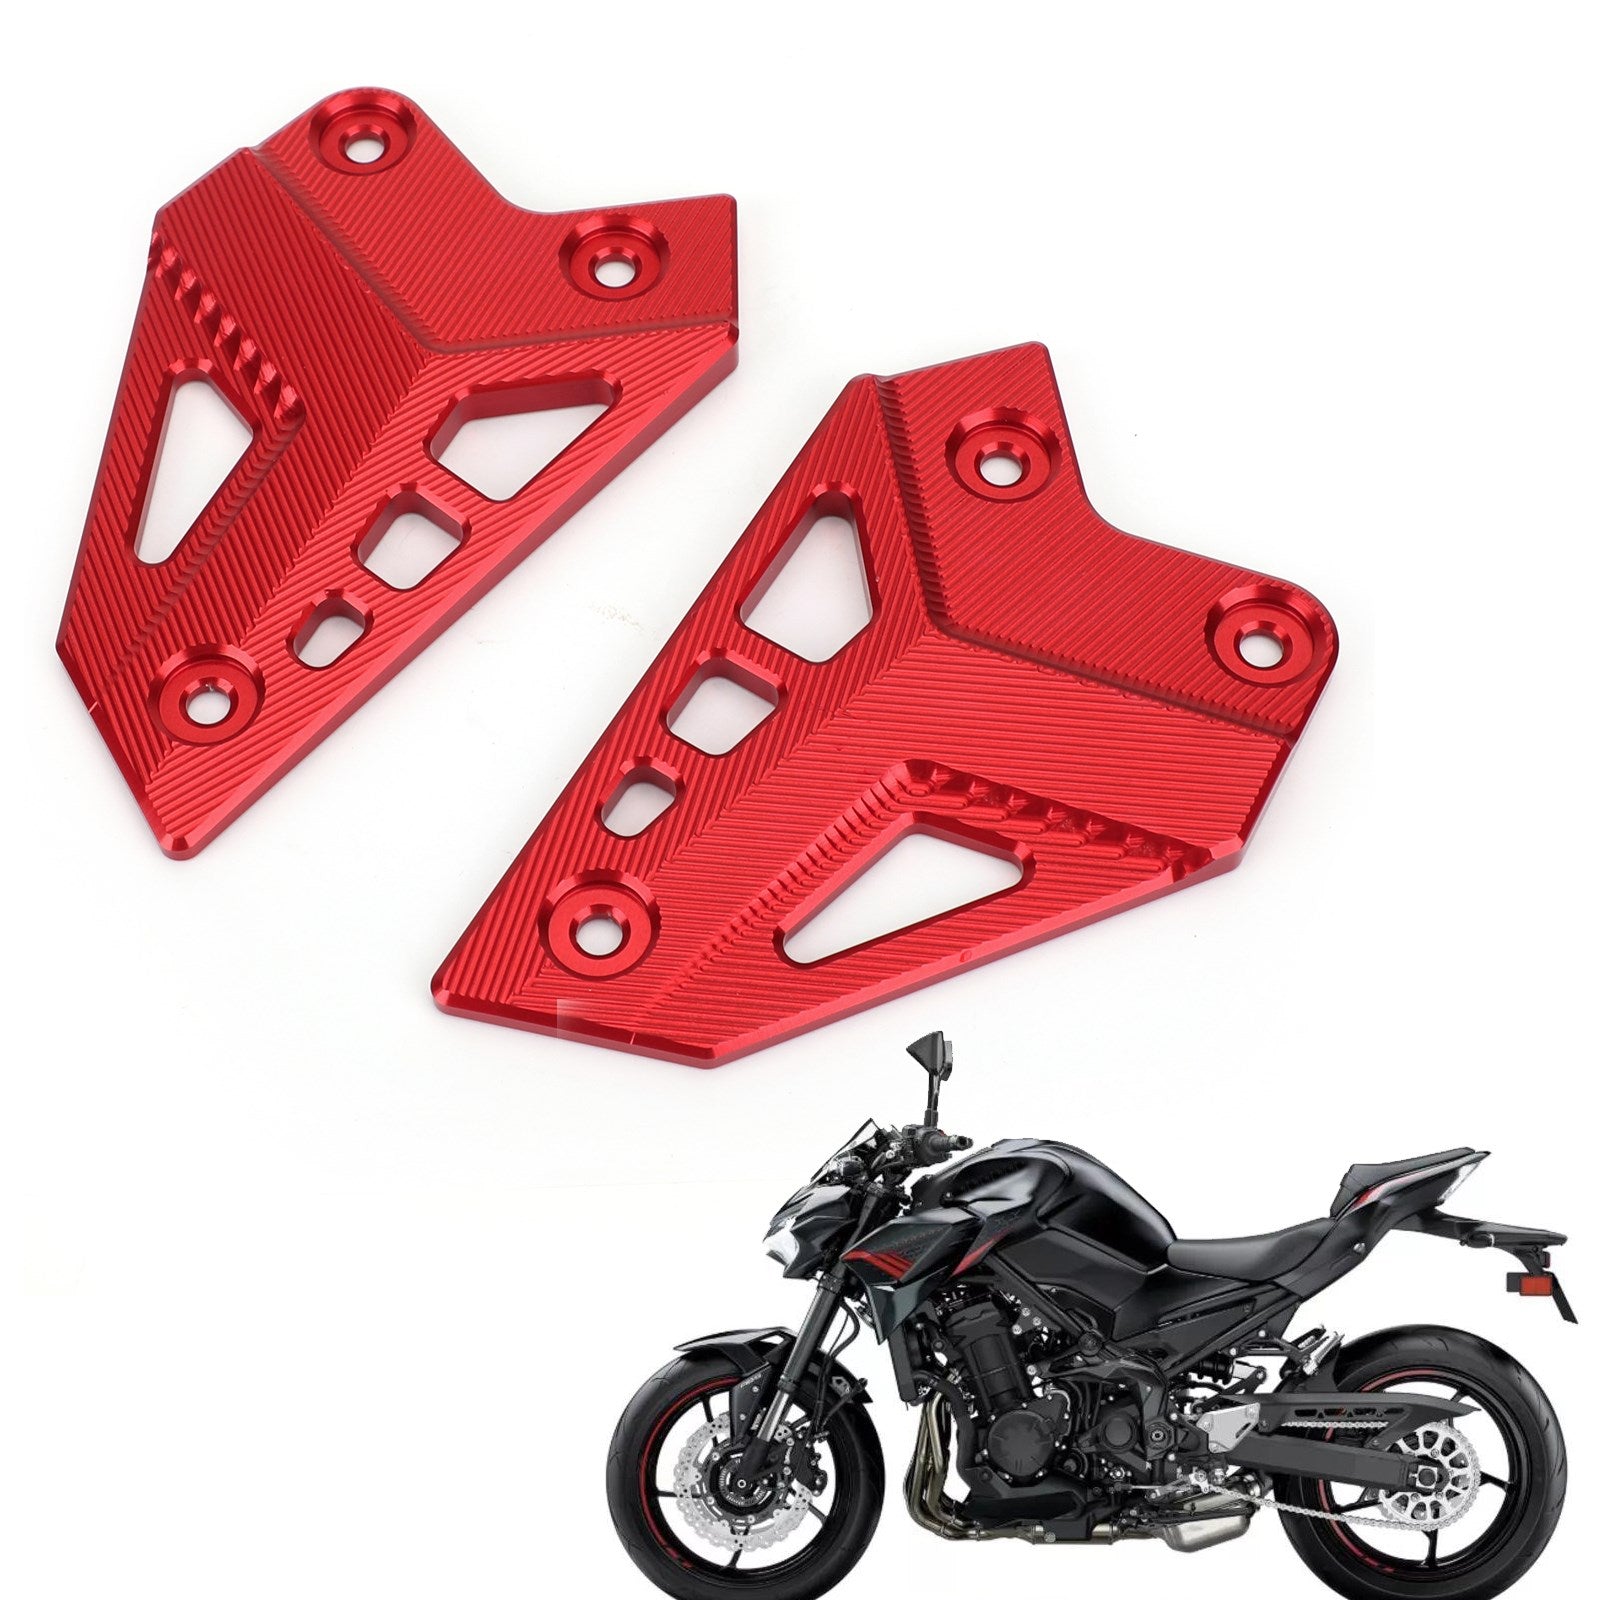 Para reposapiés de motocicleta, tacones y placas rojas para Kawasaki Z900 2017 2018 2019 2020 2021 2022